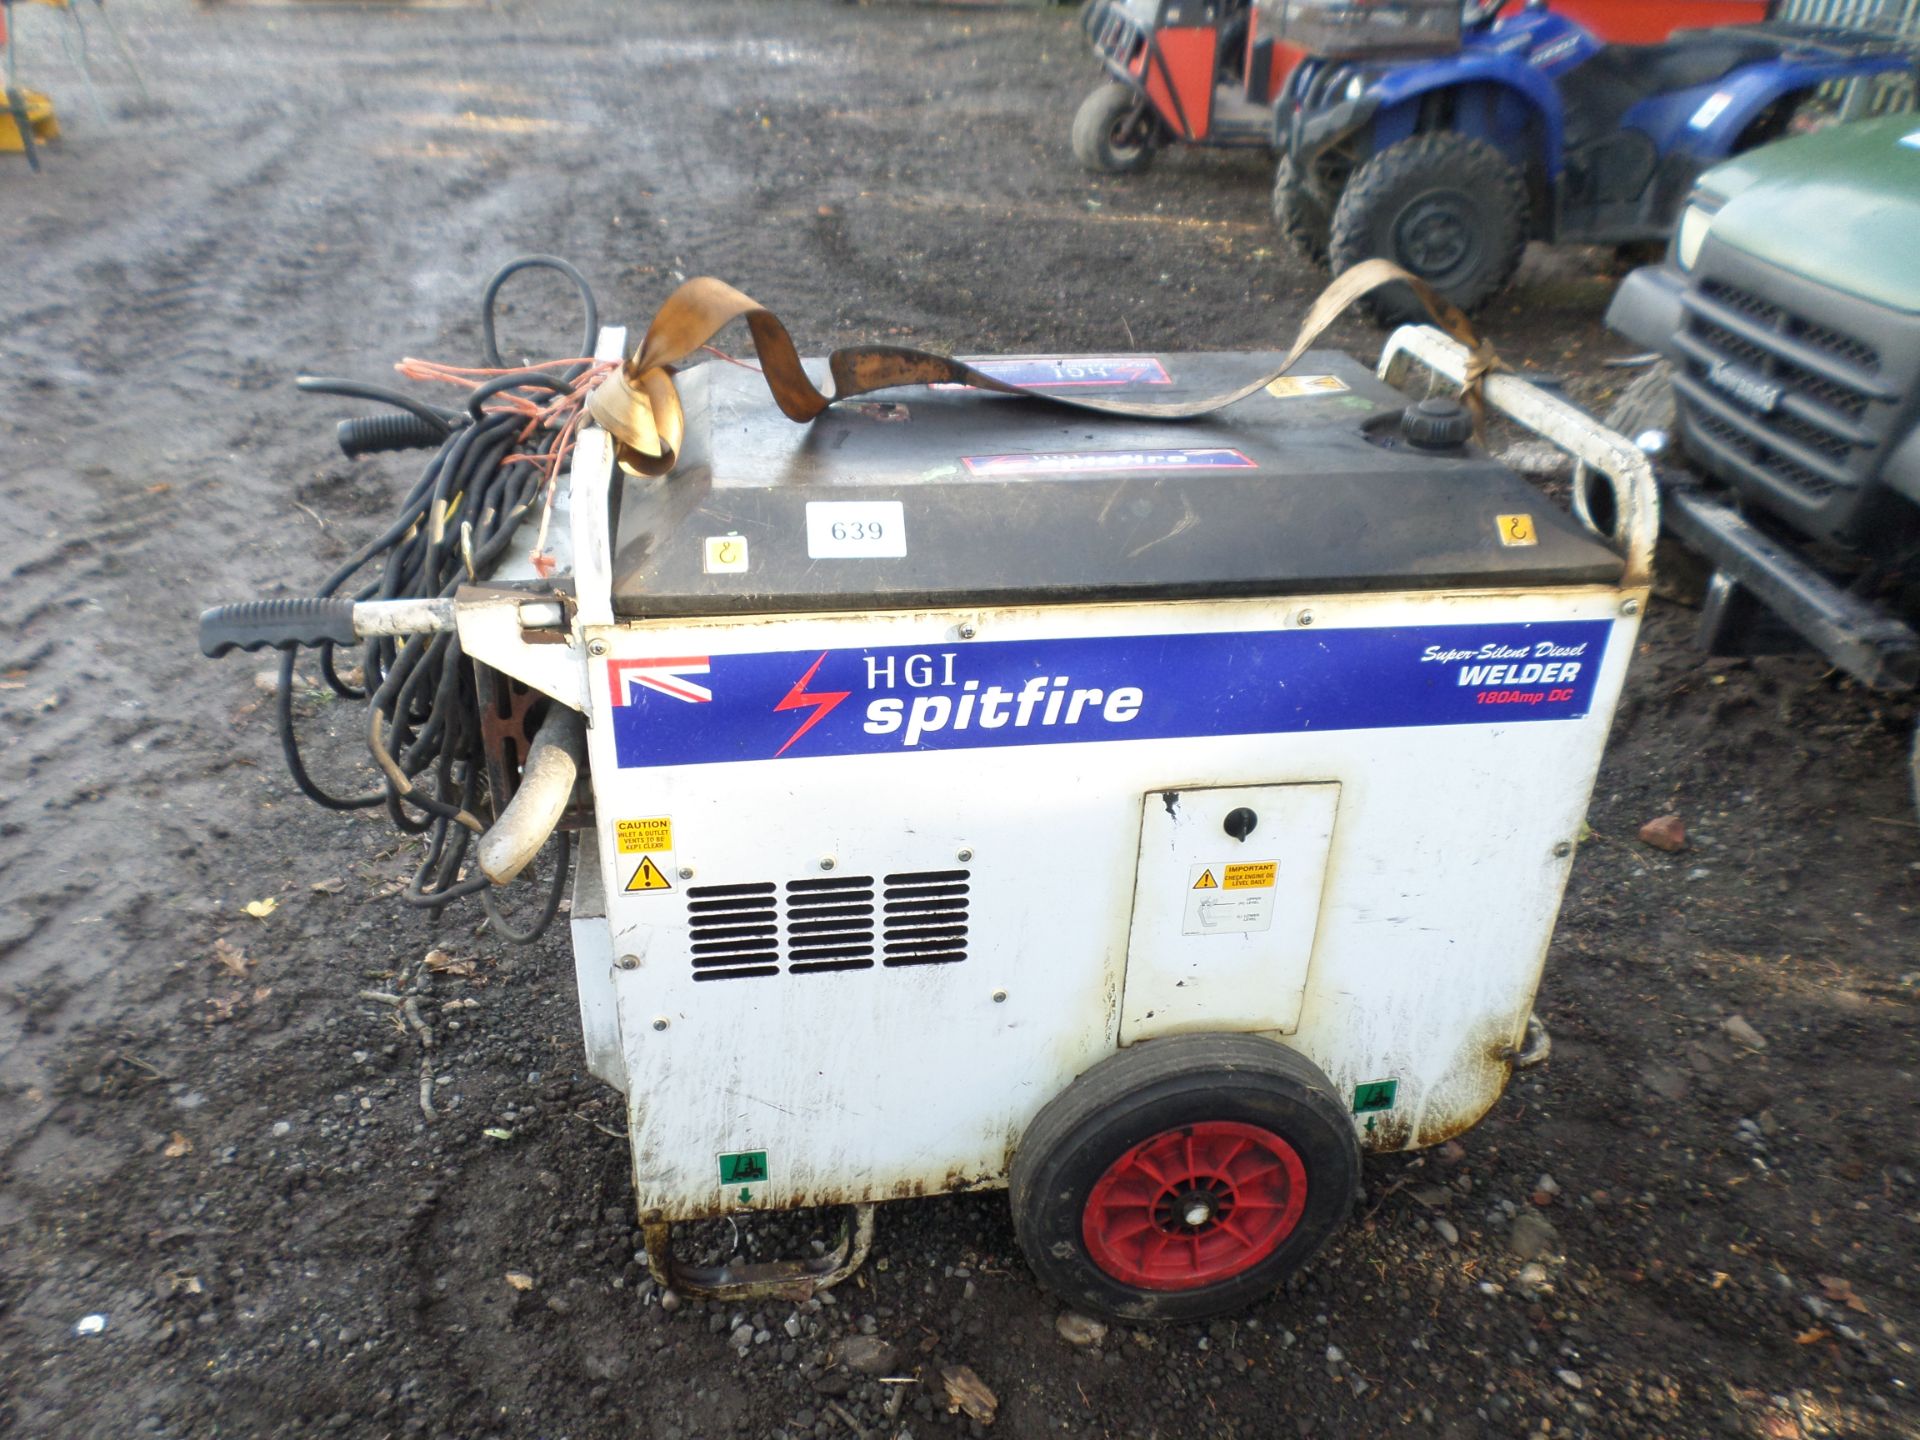 HGI Spitfire welder and generator, gwo